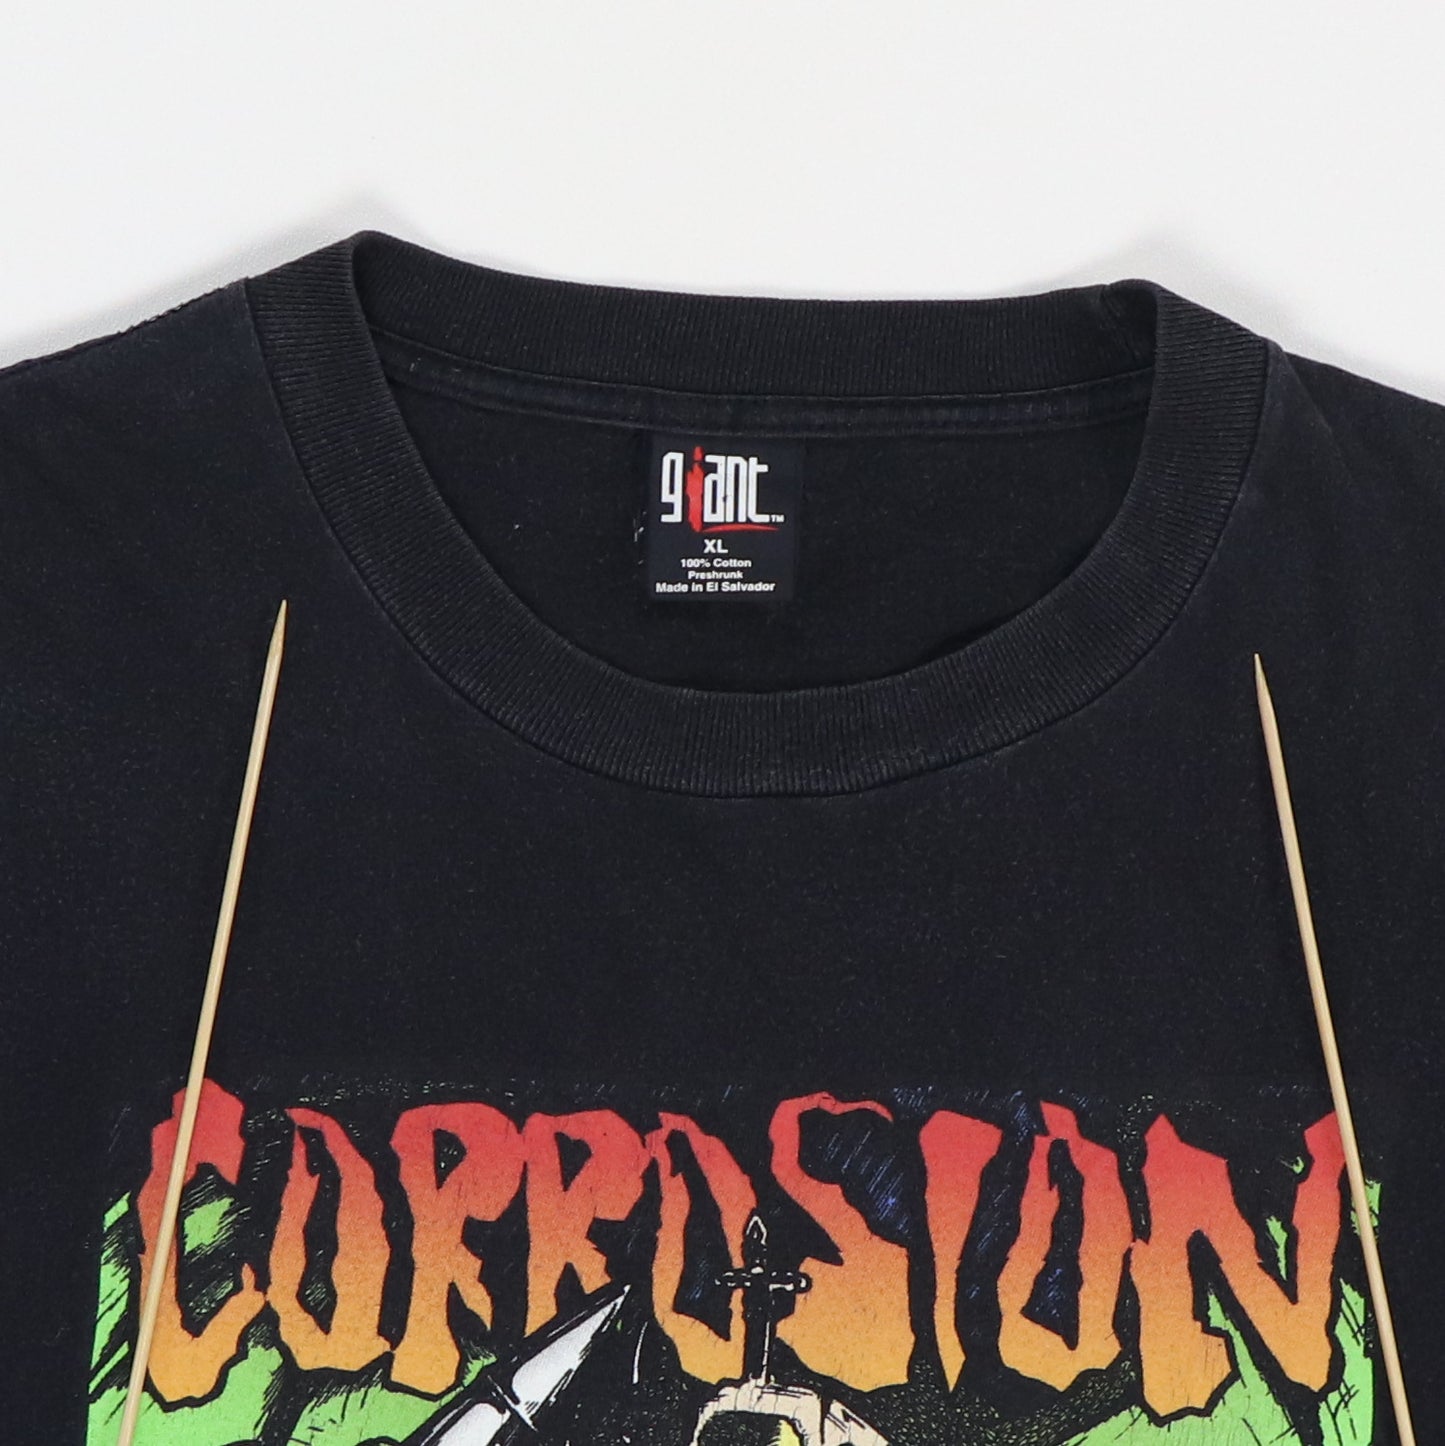 1998 Corrosion Of Conformity Shirt